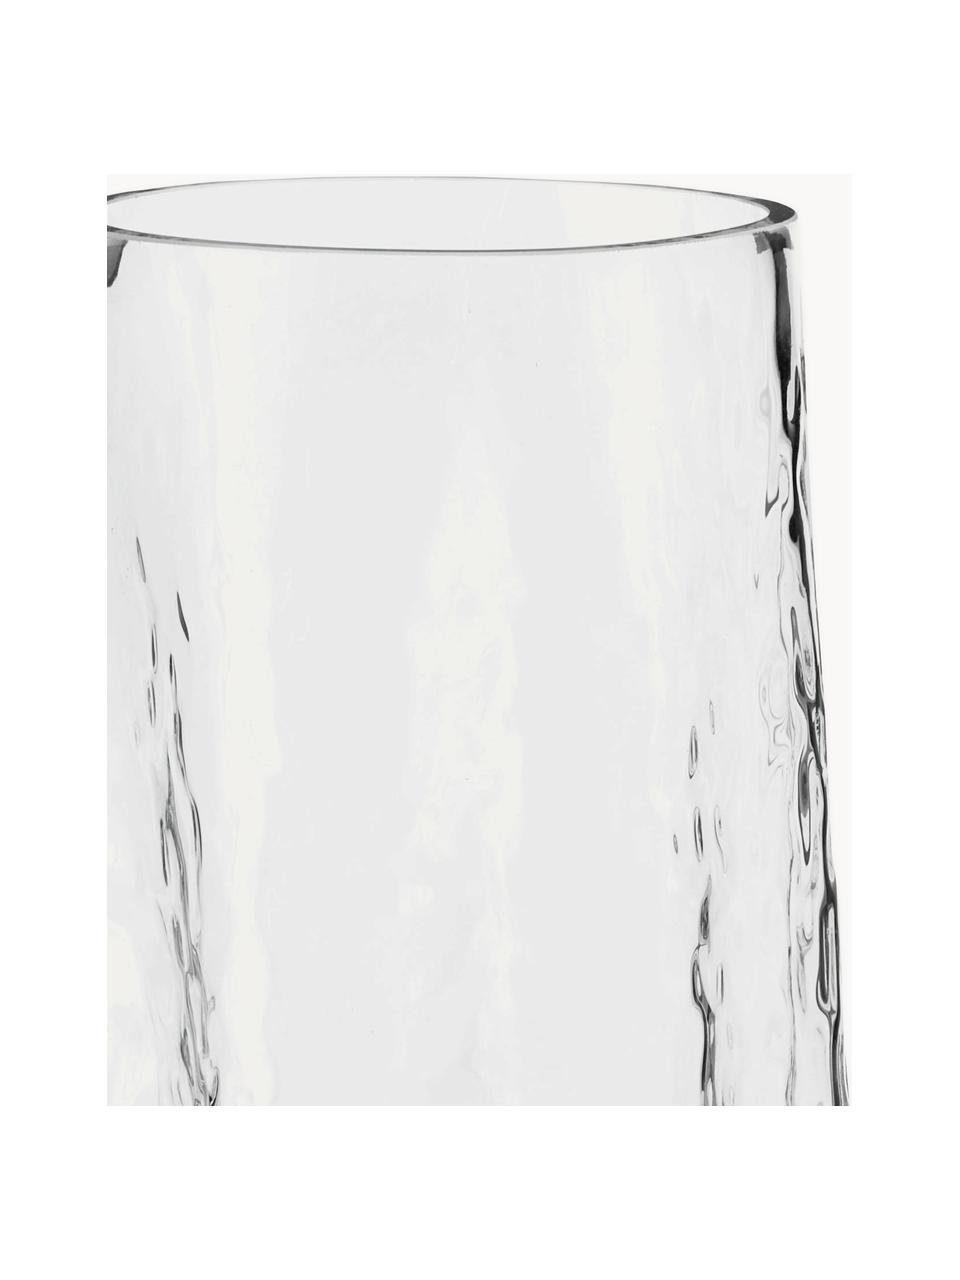 Vaso in vetro soffiato con superficie scanalata Gry, alt. 30 cm, Vetro soffiato, Trasparente, Ø 15 x Alt. 30 cm